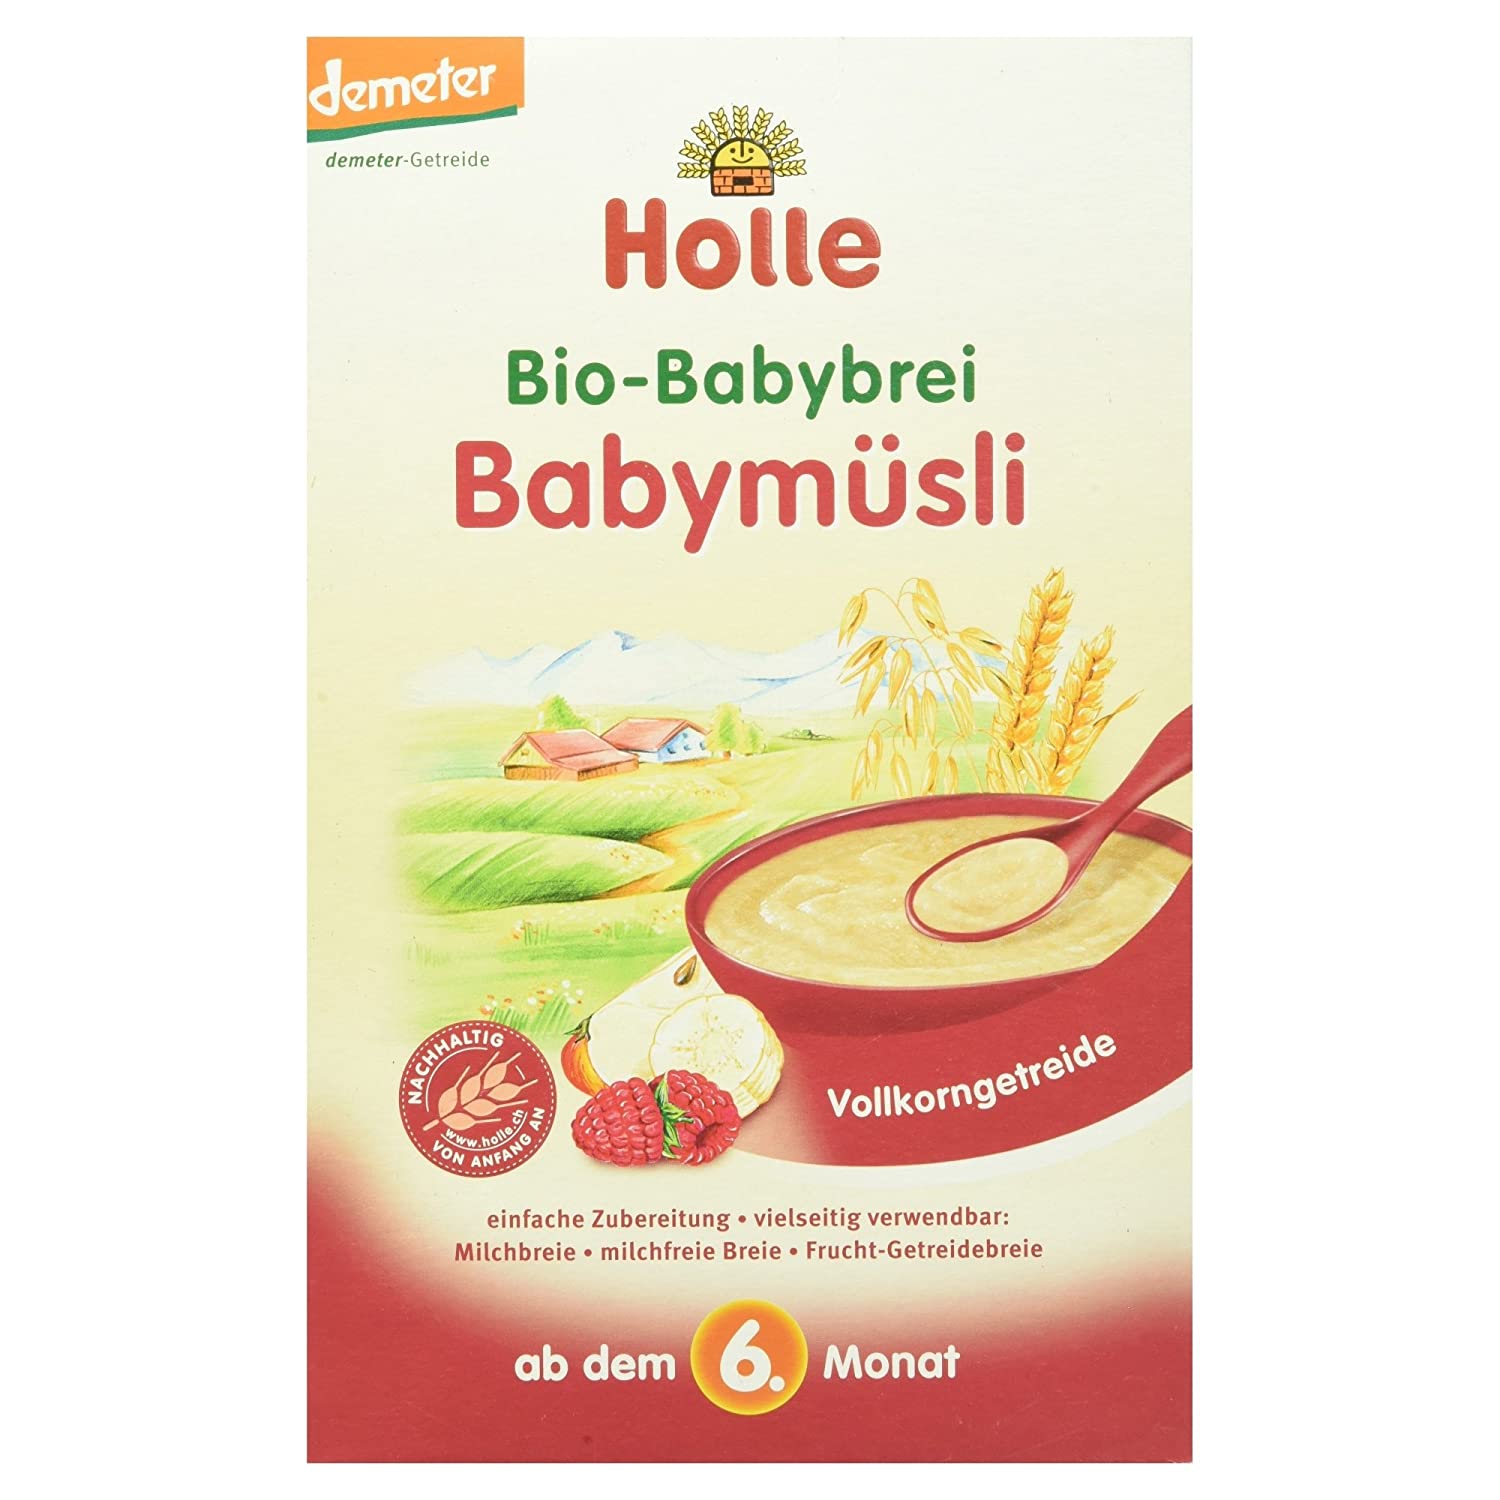 Holle Bio-Babybrei Babymüsli (1 x 250 g)